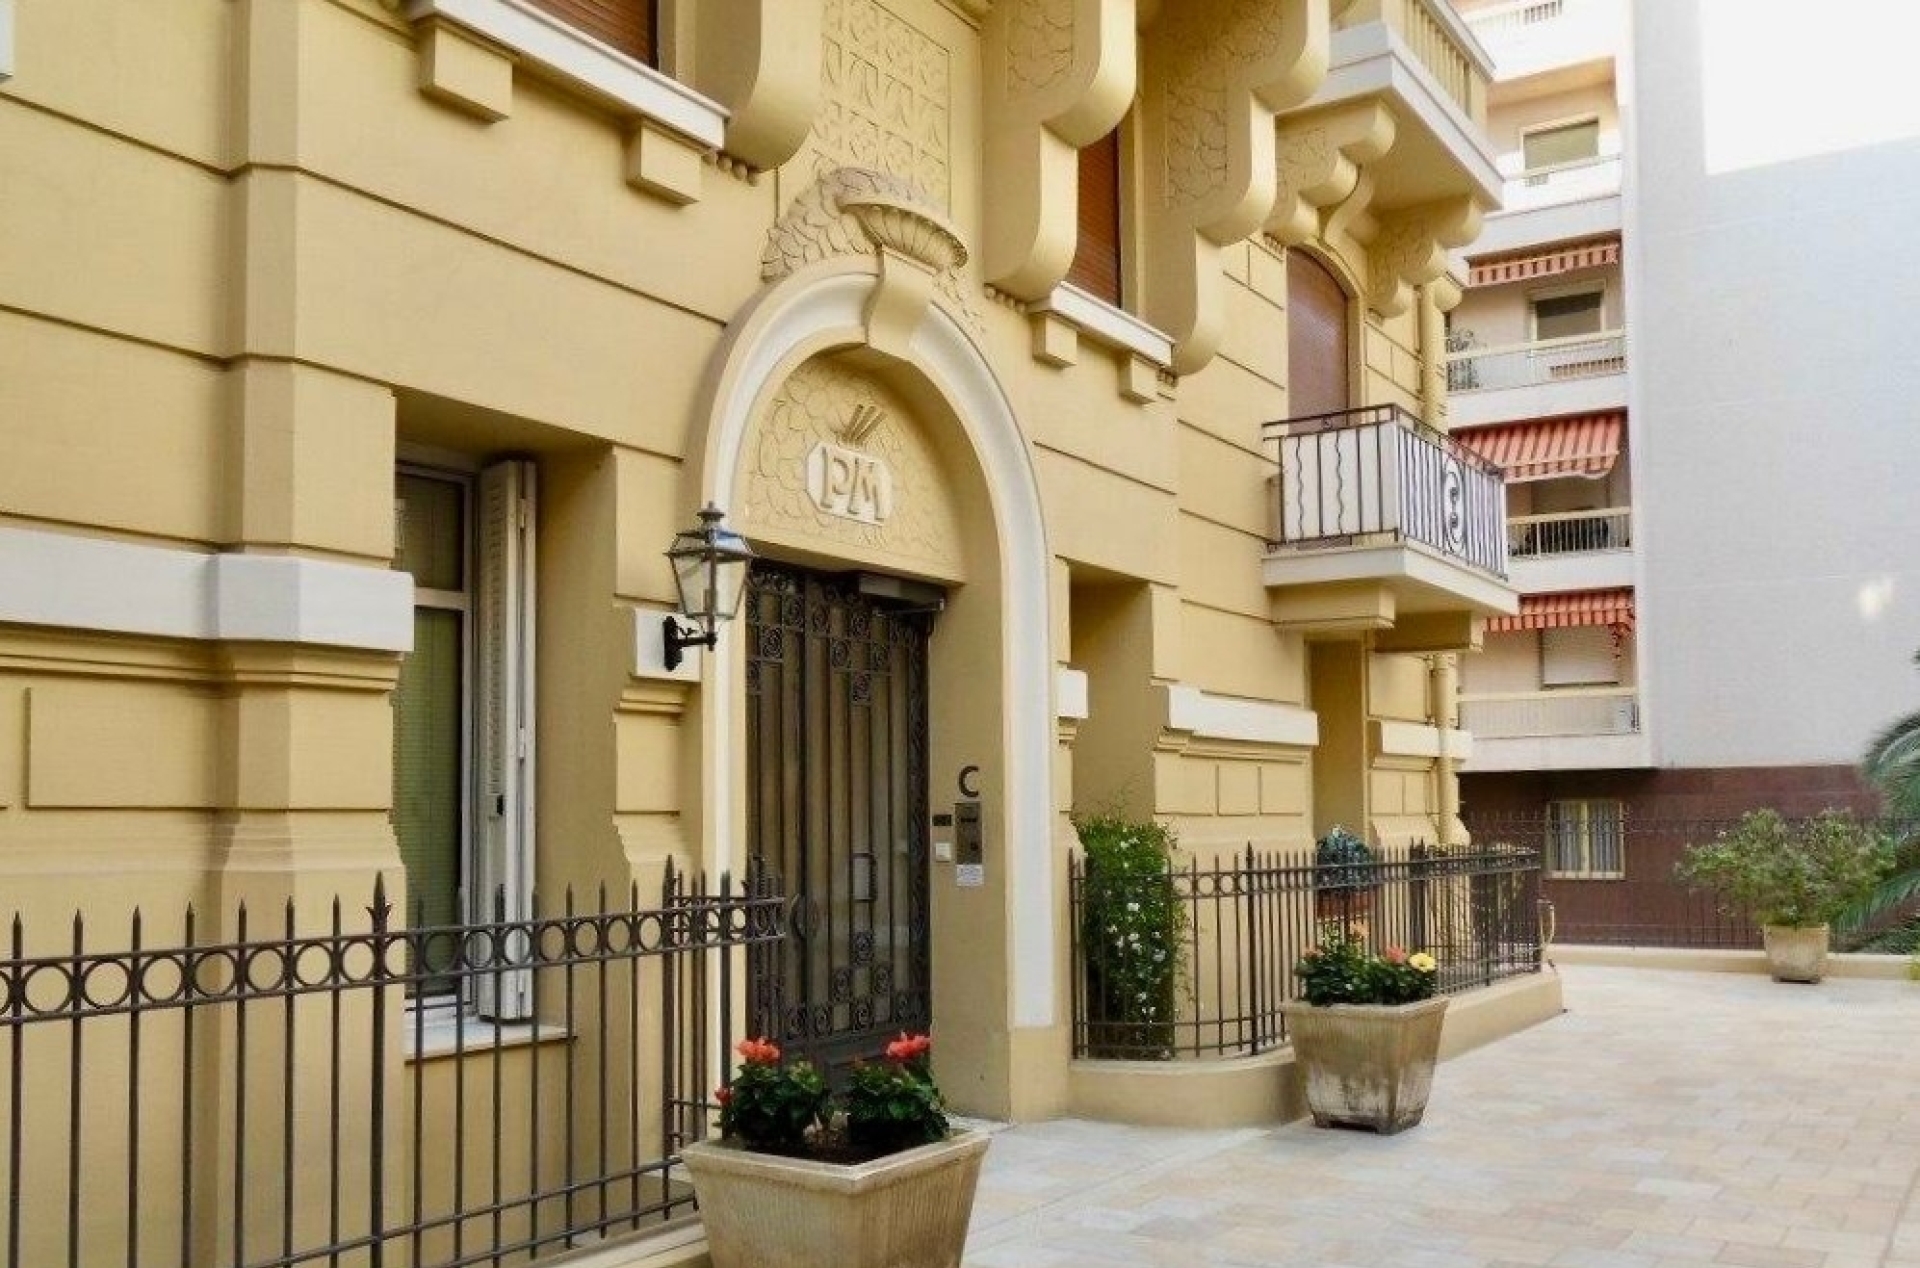 Dotta Appartement de 4 pieces a vendre - PALAIS MIRAMARE - Monte-Carlo - Monaco - img1663164114